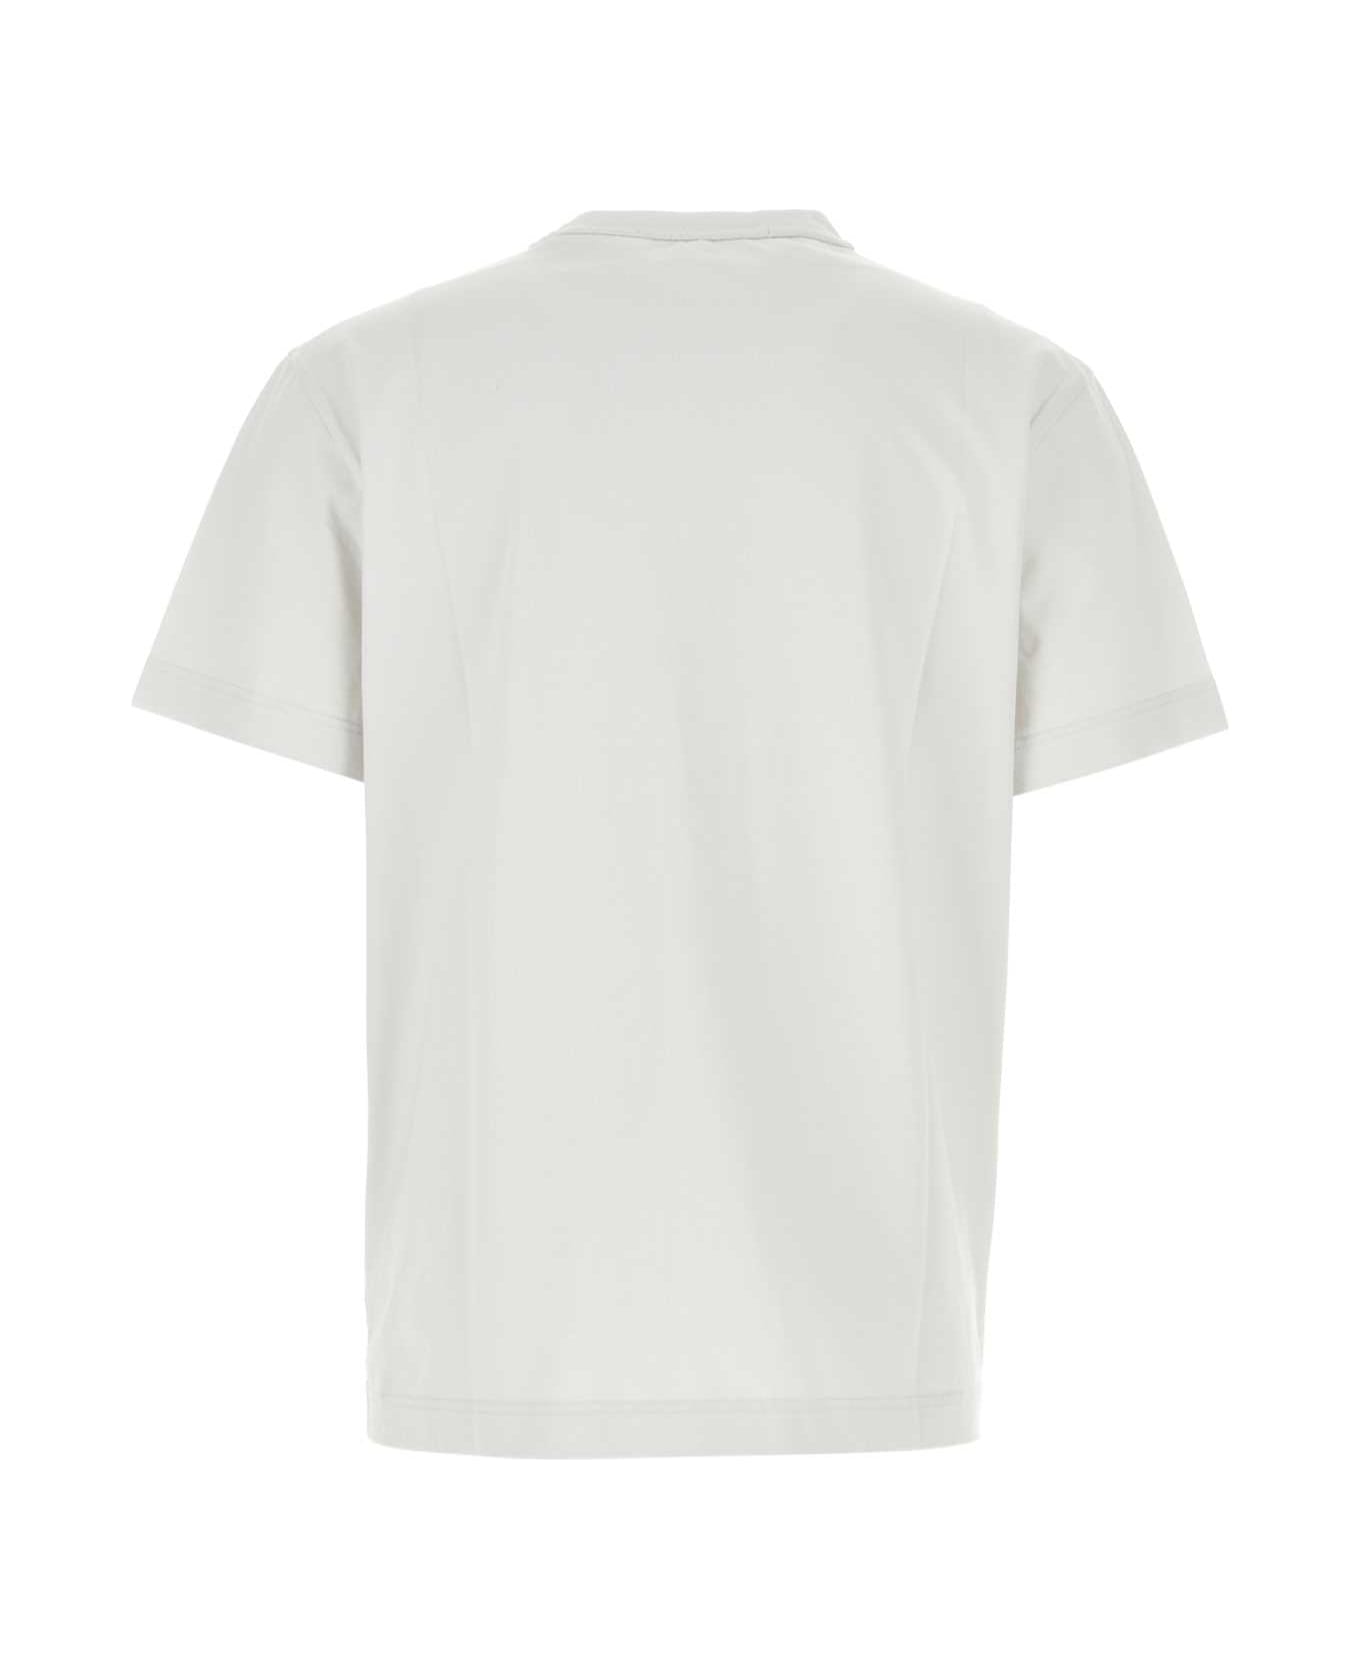 Alexander Wang White Cotton T-shirt - GUNSMOKE